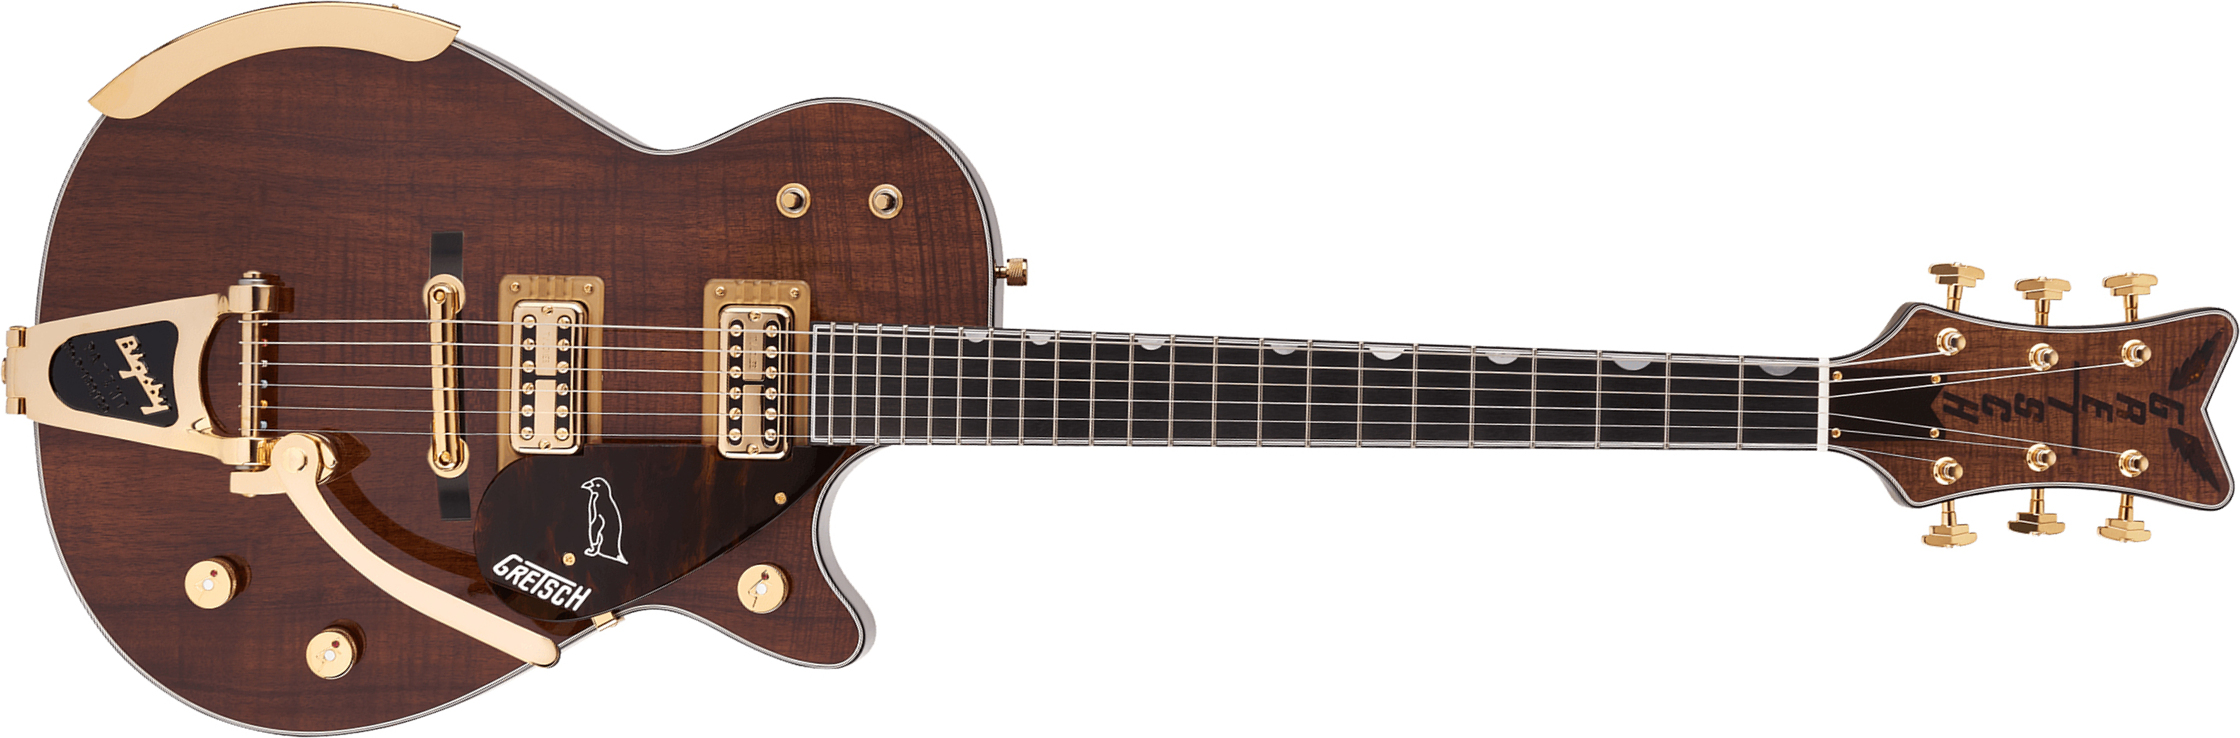 Gretsch G6134t-ltd Penguin Koa Bigsby Pro Jap 2h Trem Eb - Natural - Enkel gesneden elektrische gitaar - Main picture